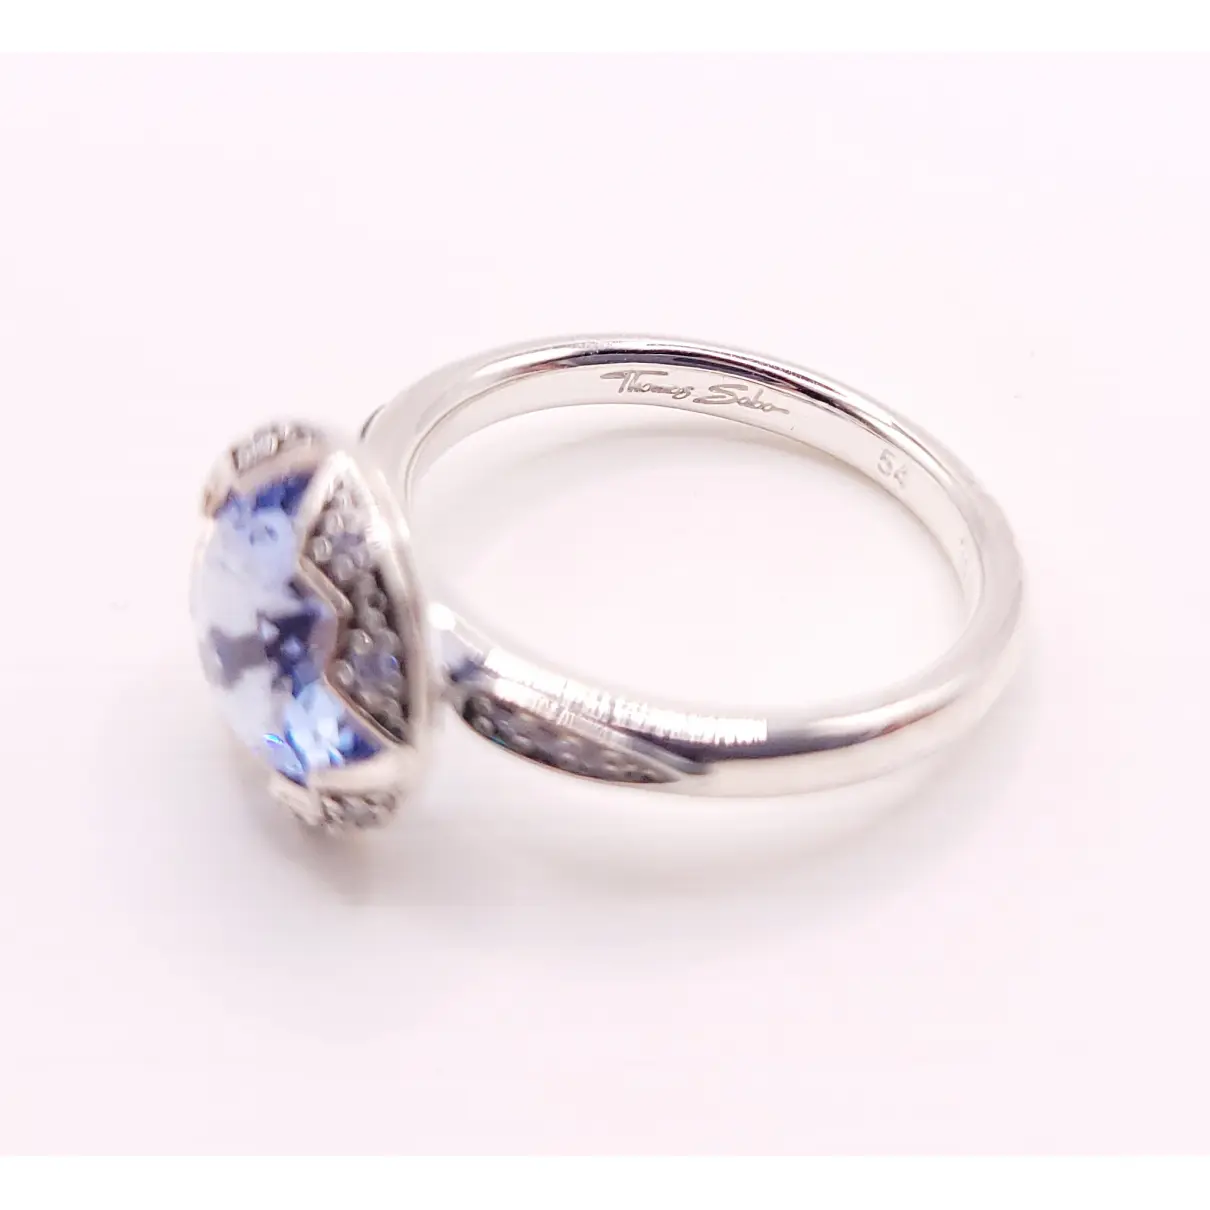 Buy Thomas Sabo Silver ring online